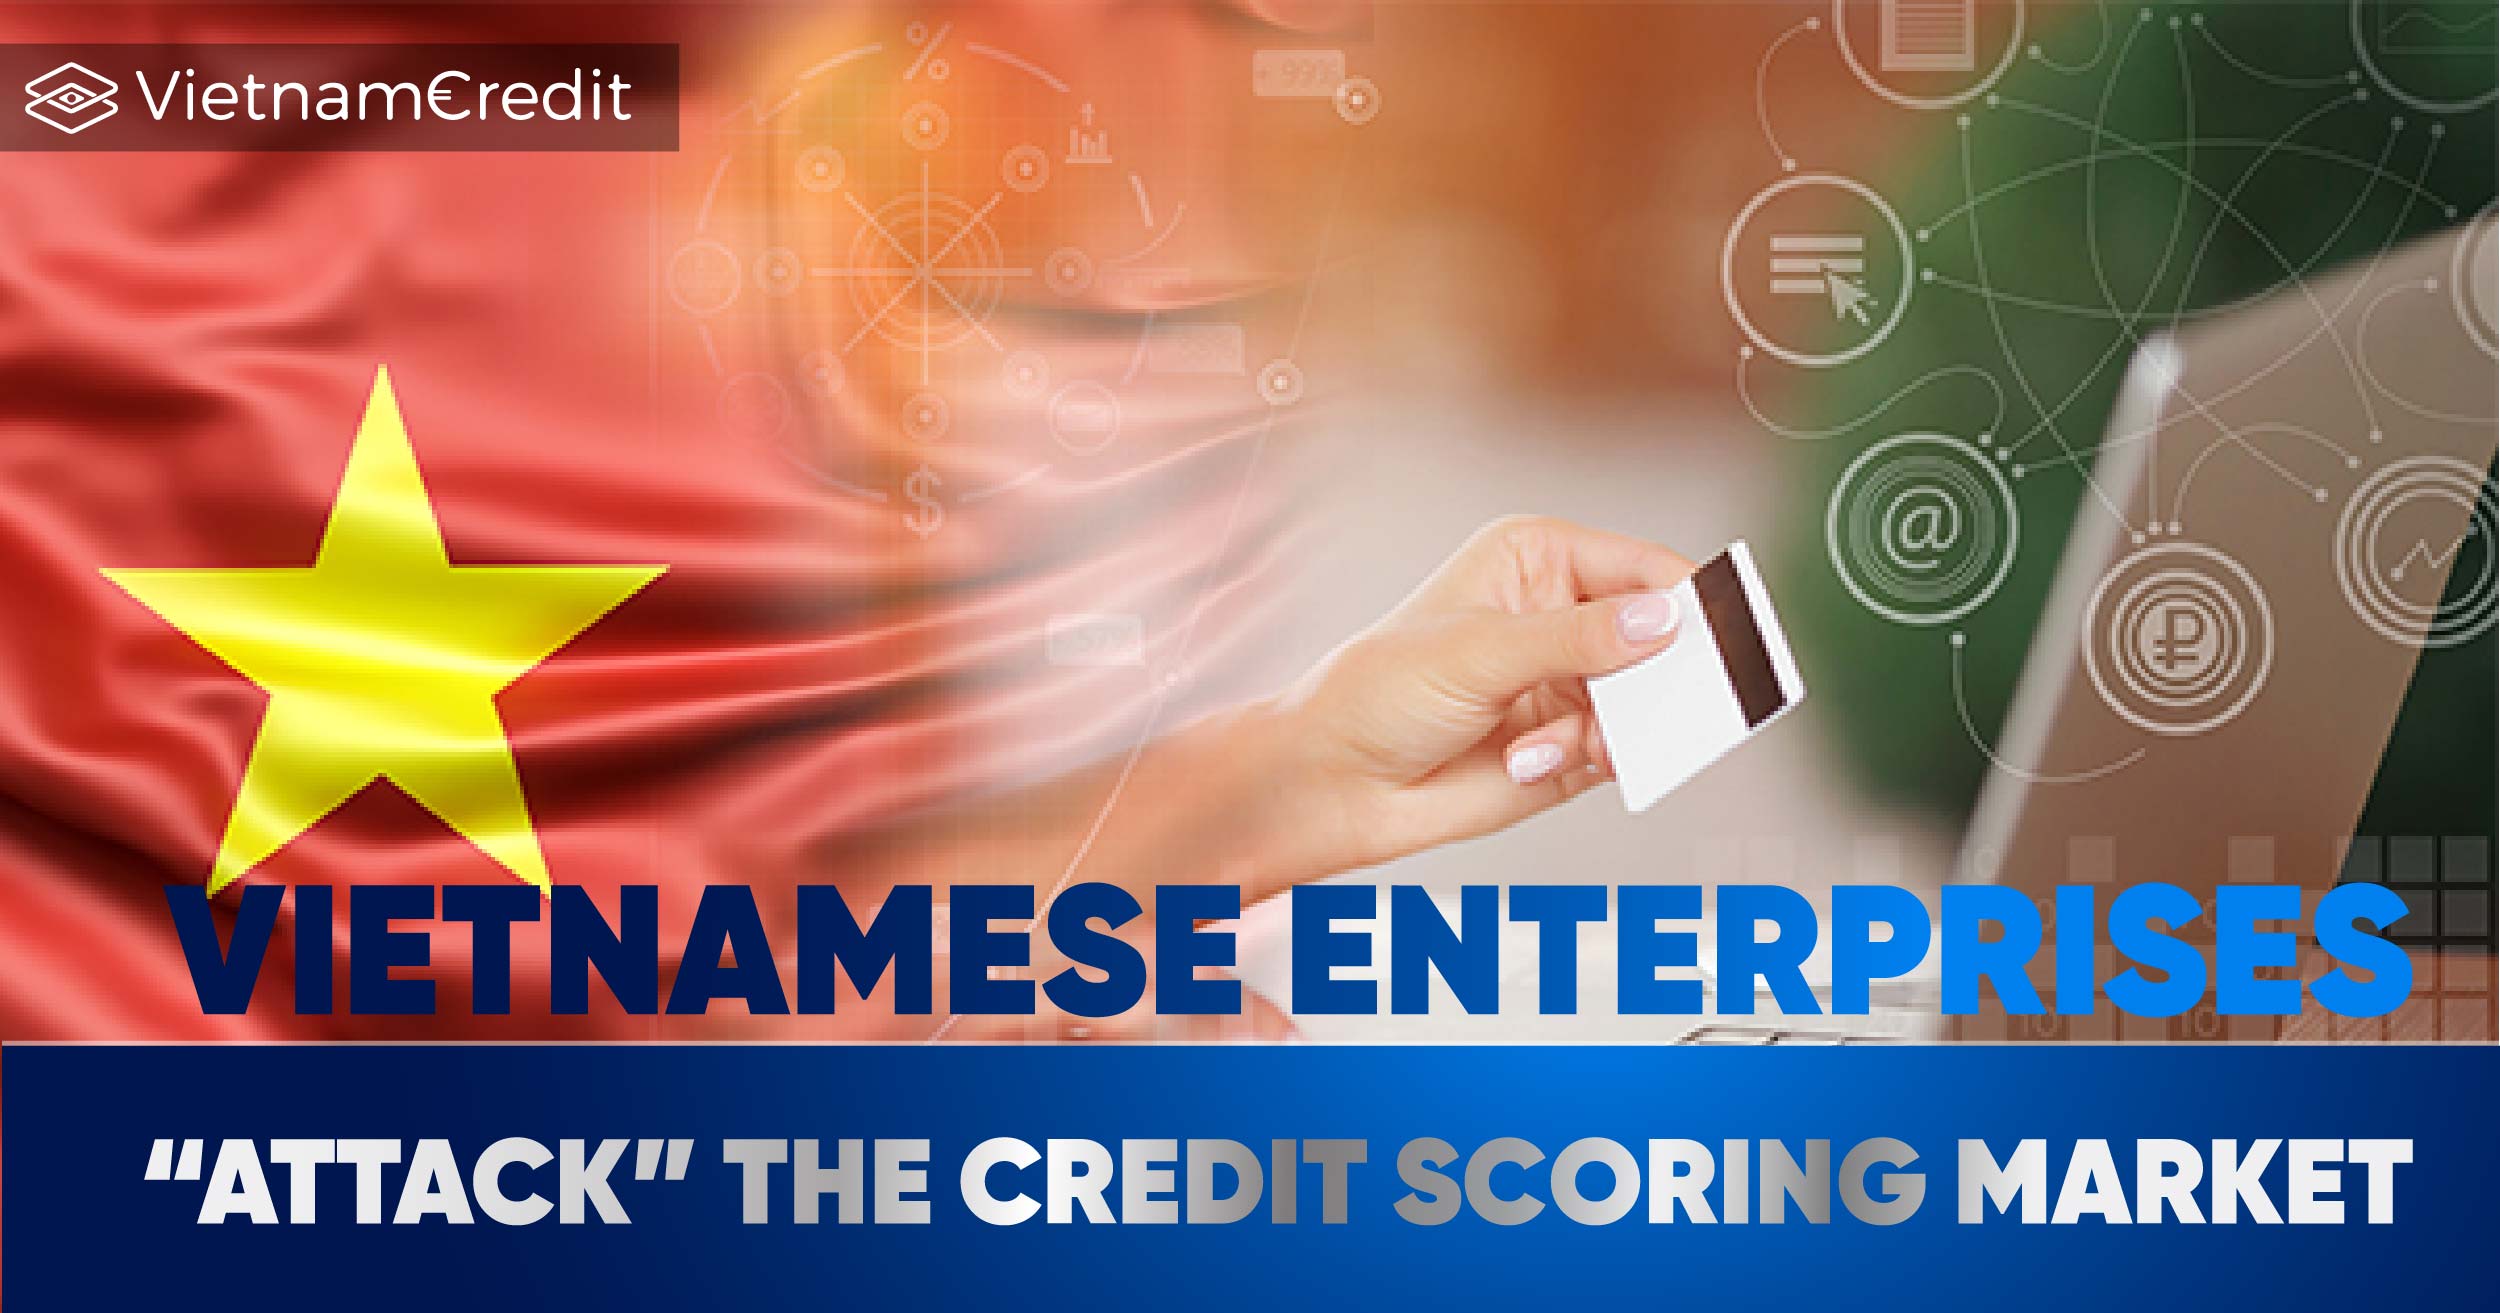 Vietnamese enterprises “attack” the credit scoring market